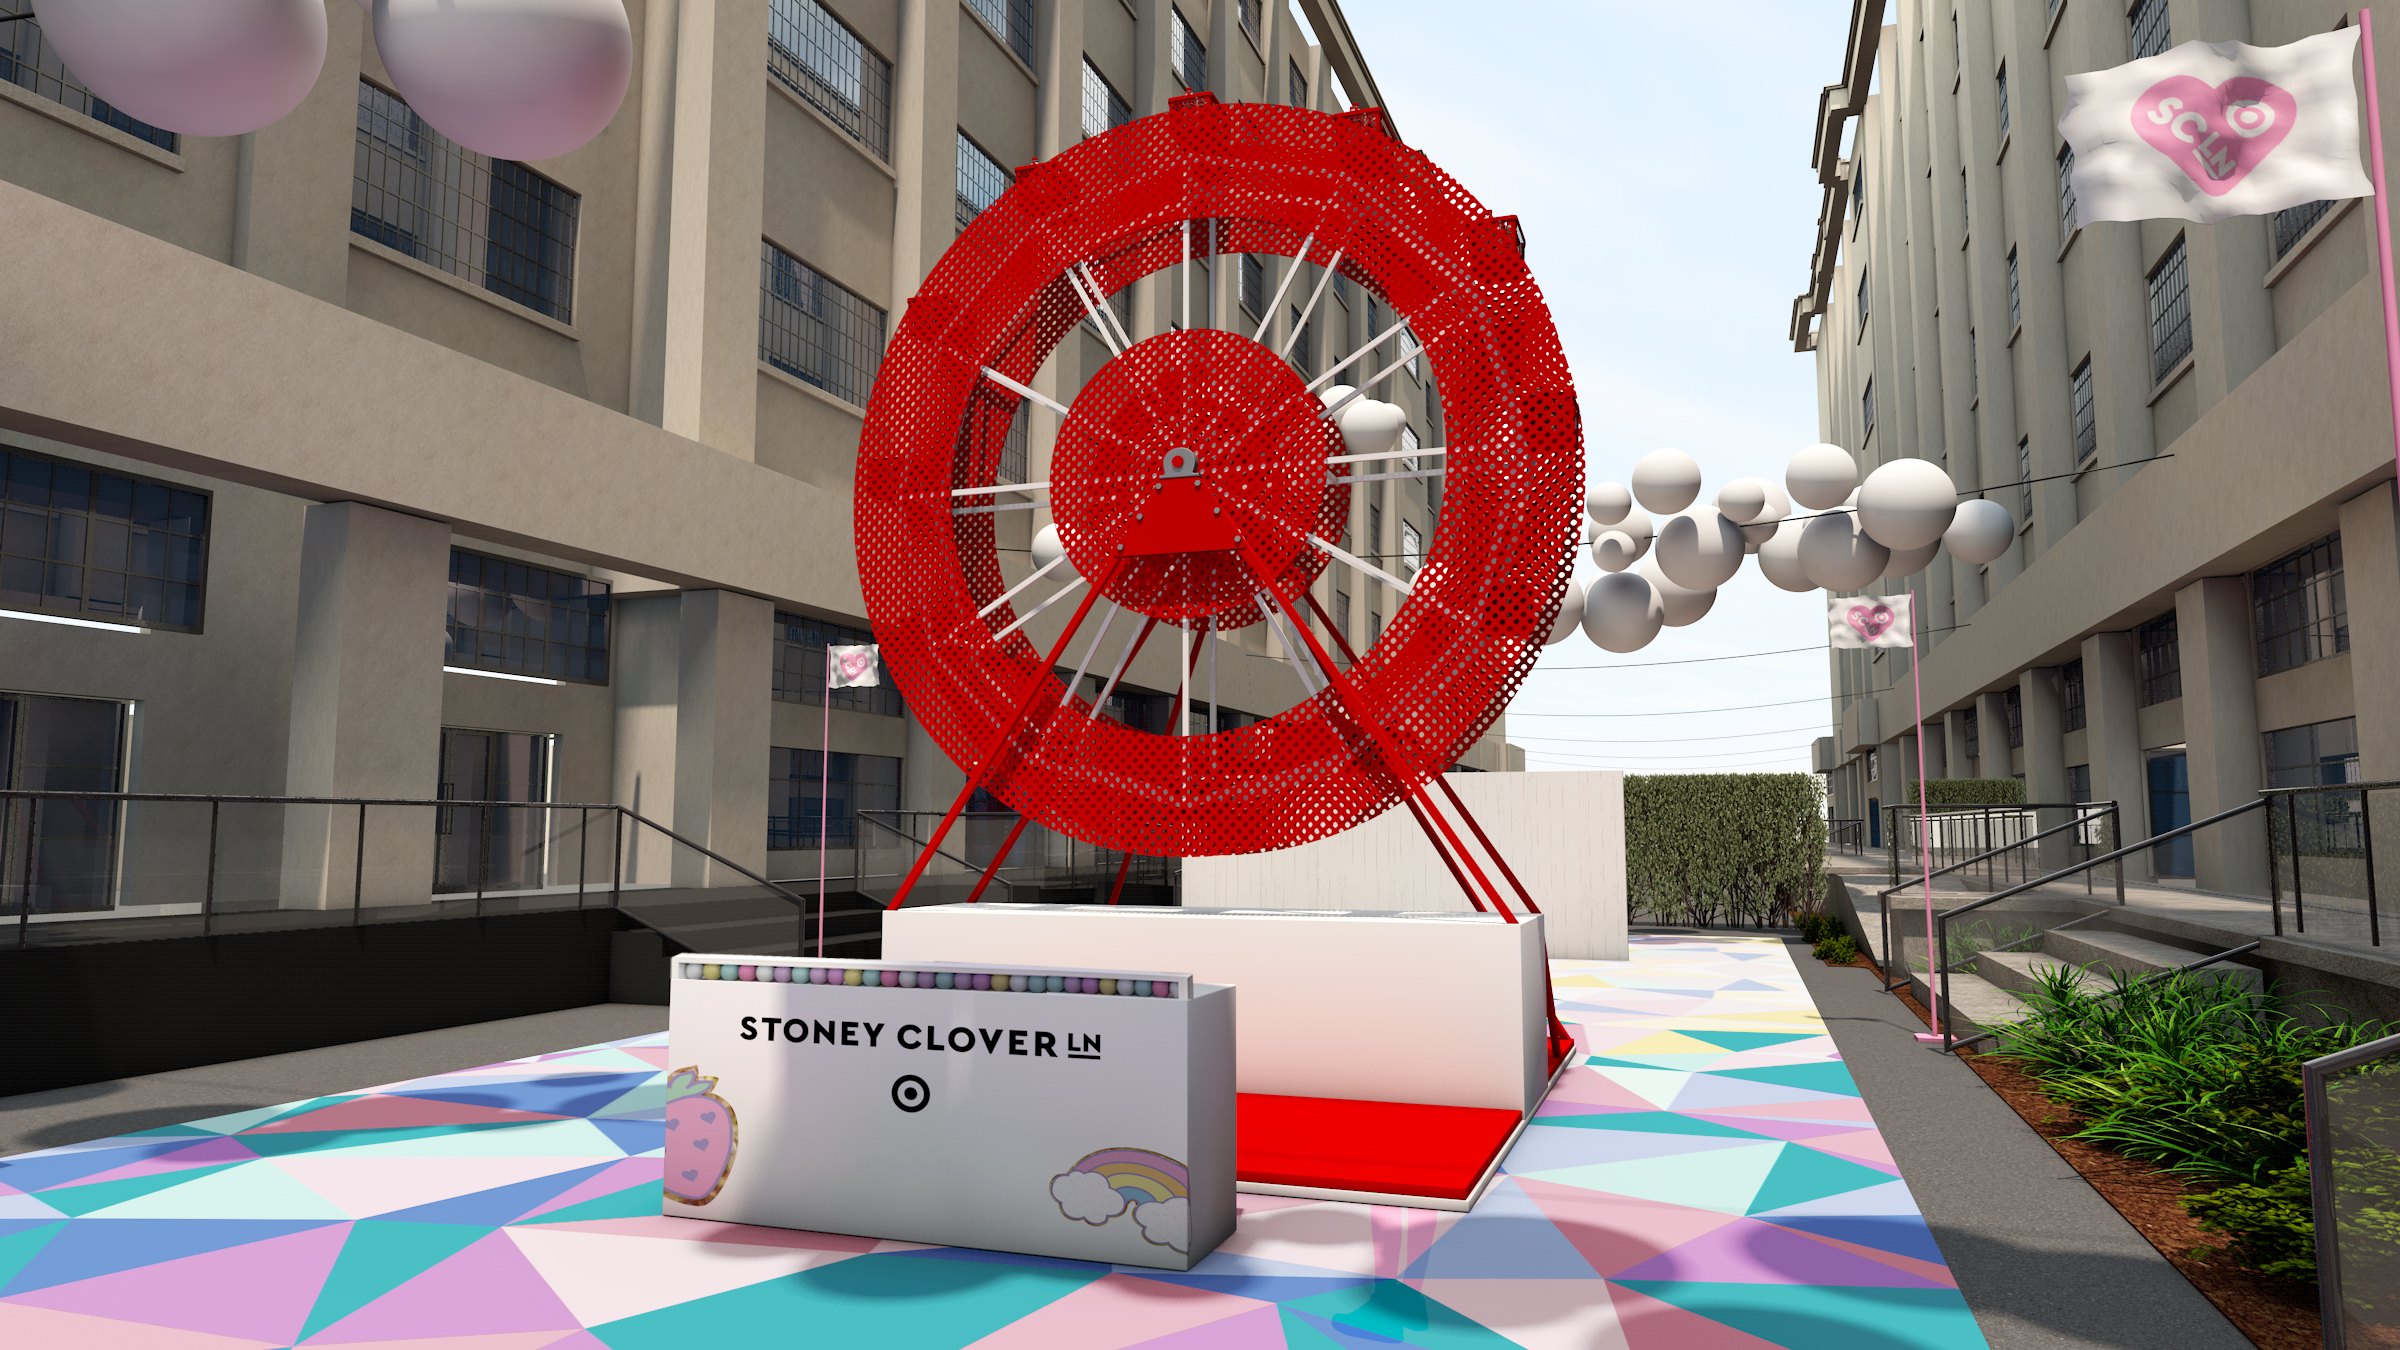 The Stoney Clover Lane and Target boardwalk was unabashedly designed for  Instagram